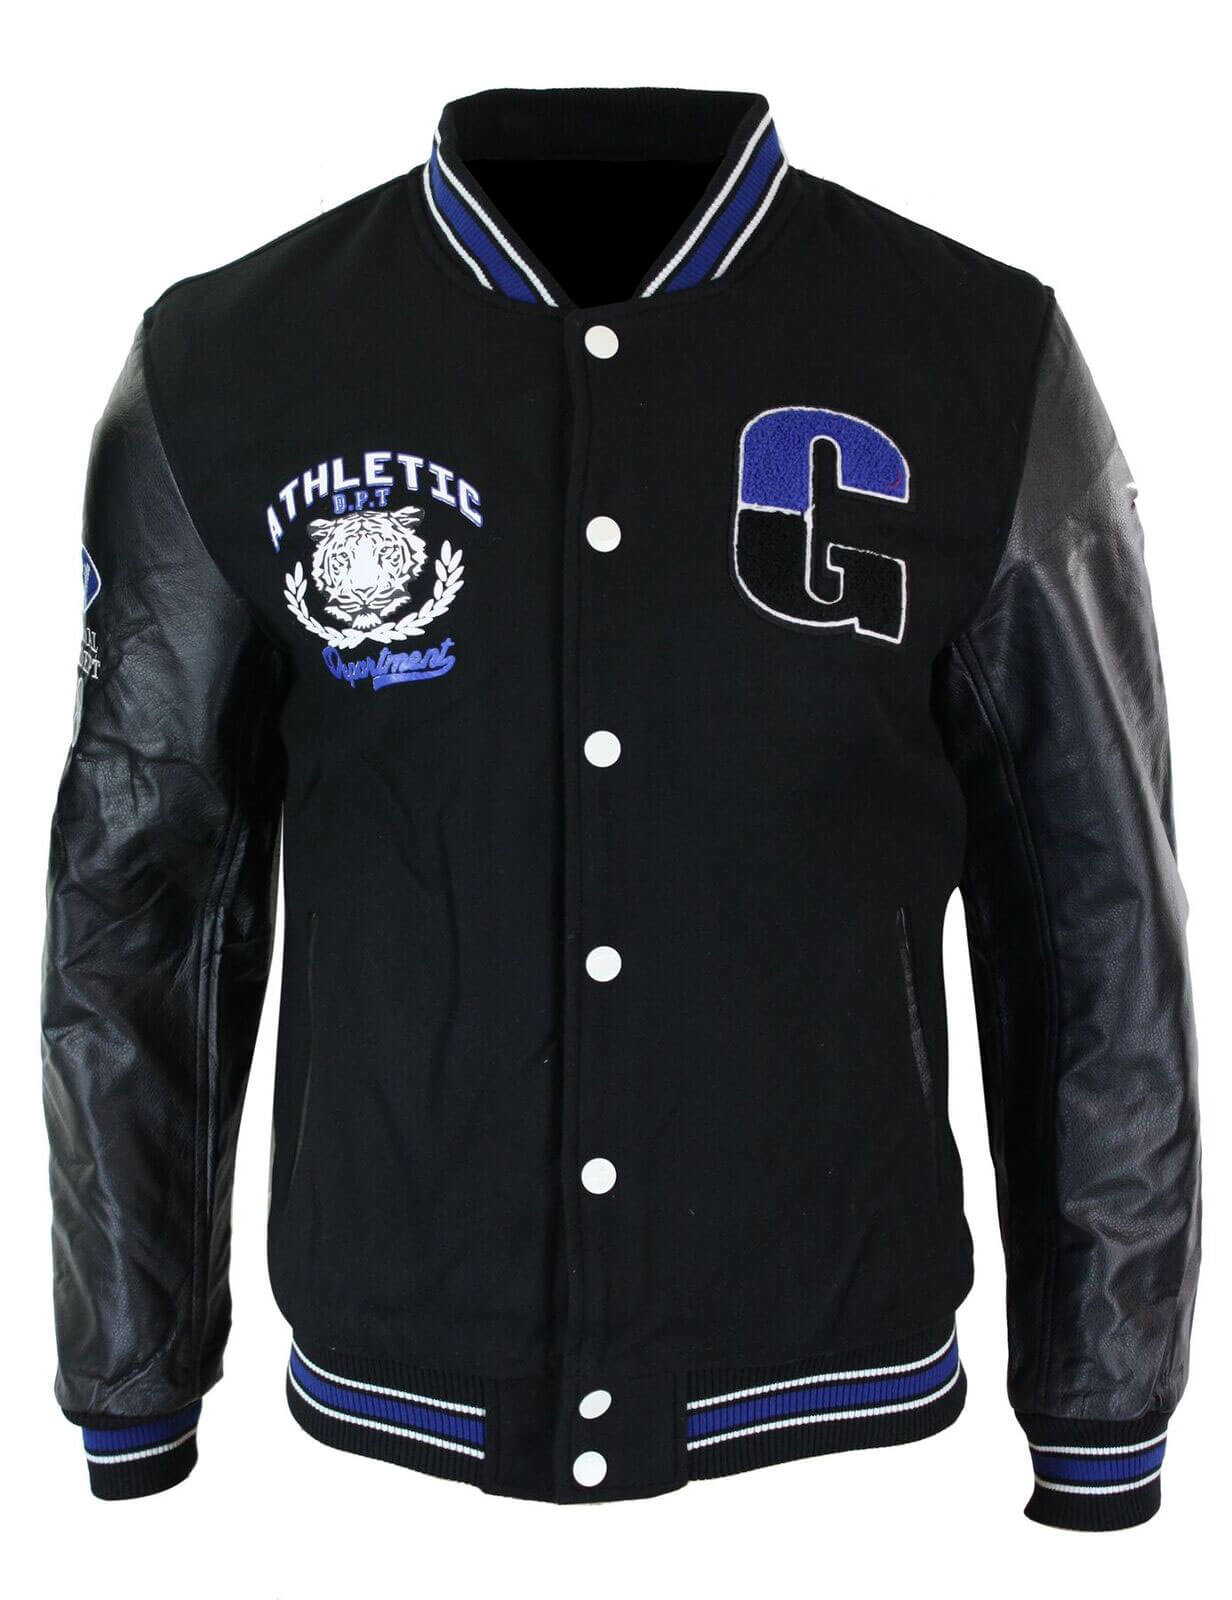 Maker of Jacket Men Jackets Athletics Black Blue Varsity Baseball Letterman